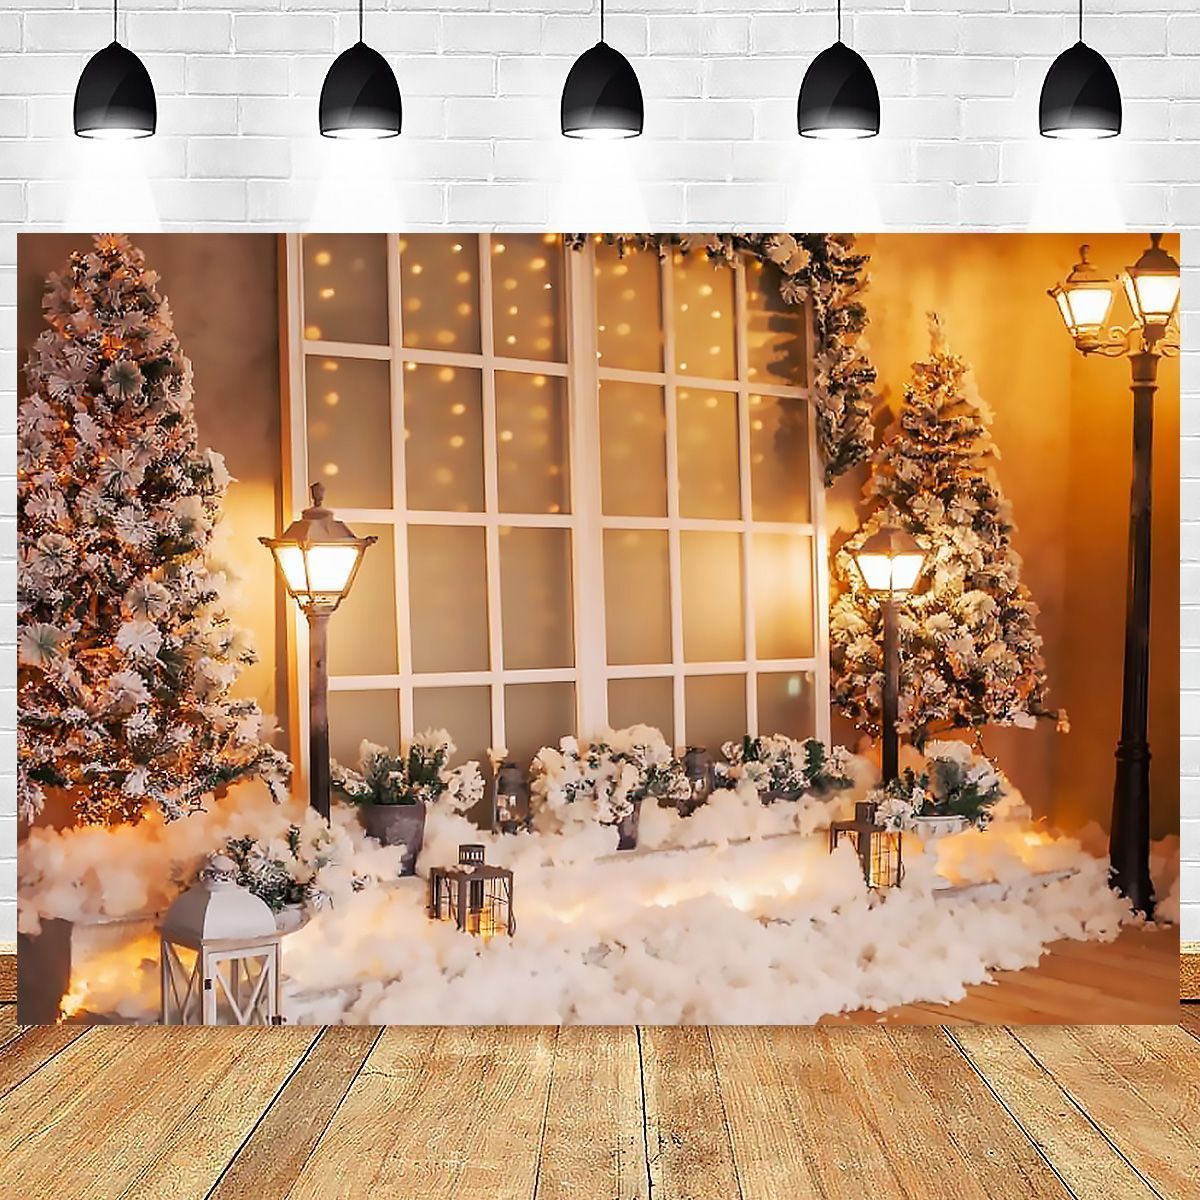 09x15m-15x21m-18x27m-Christmas-Tree-Photography-Backdrops-Snow-Street-Lamp-Window-Background-Cloth-f-1764507